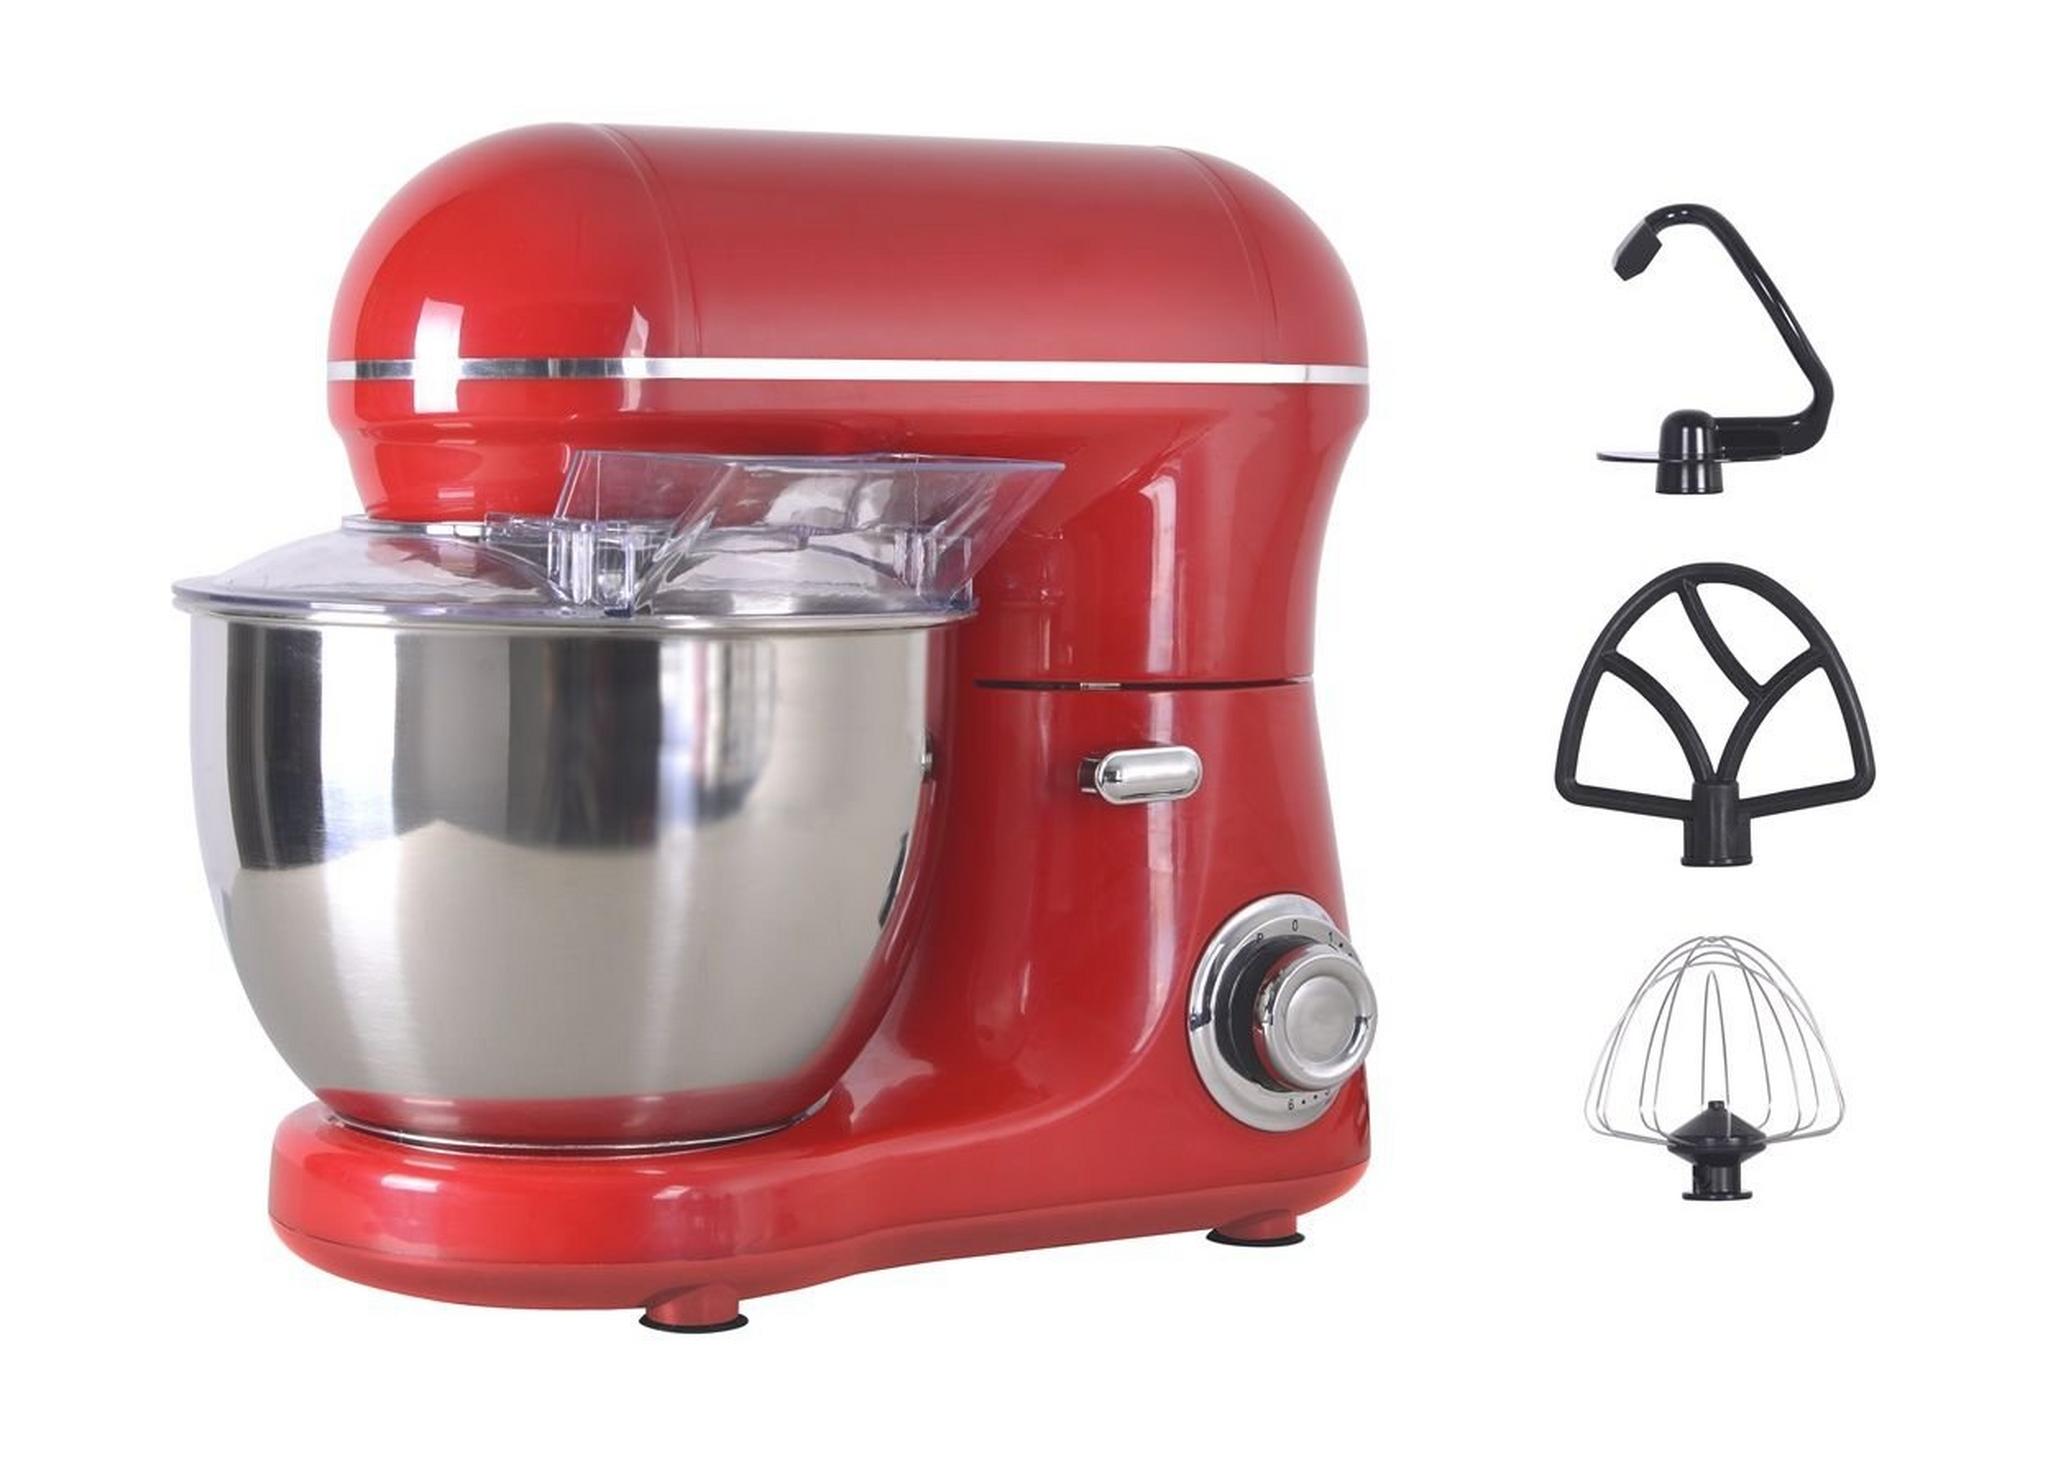 Wansa 600W 4L Kitchen Machine (LW-6835) – Red